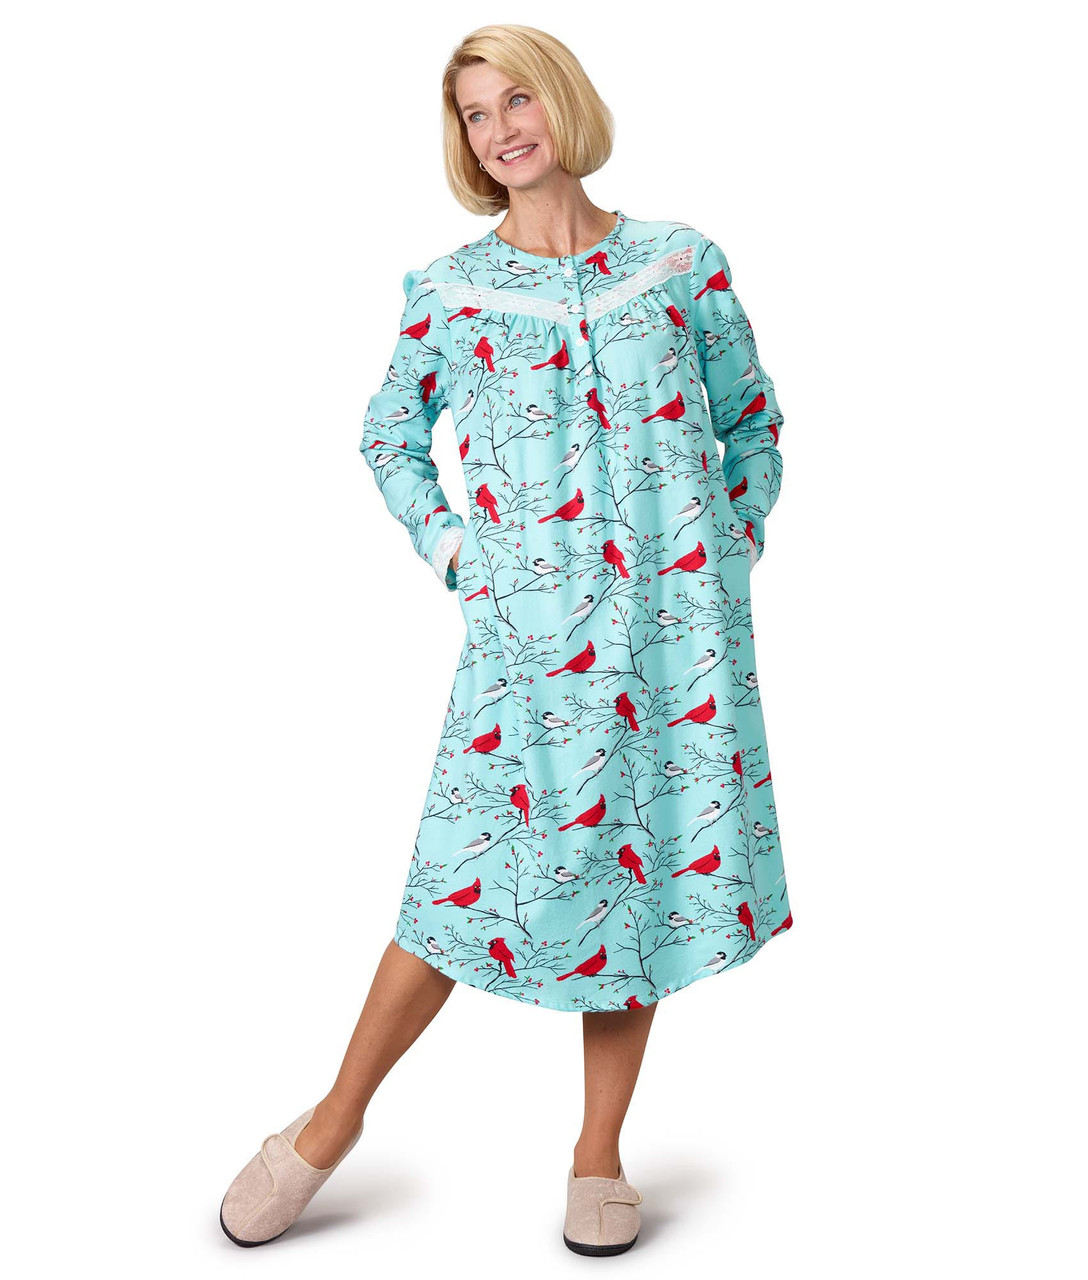 Silverts SV26410 Women's Open Back Flannel Nightgown Cardinal Print, Size=XL, SV26410-SV1465-XL